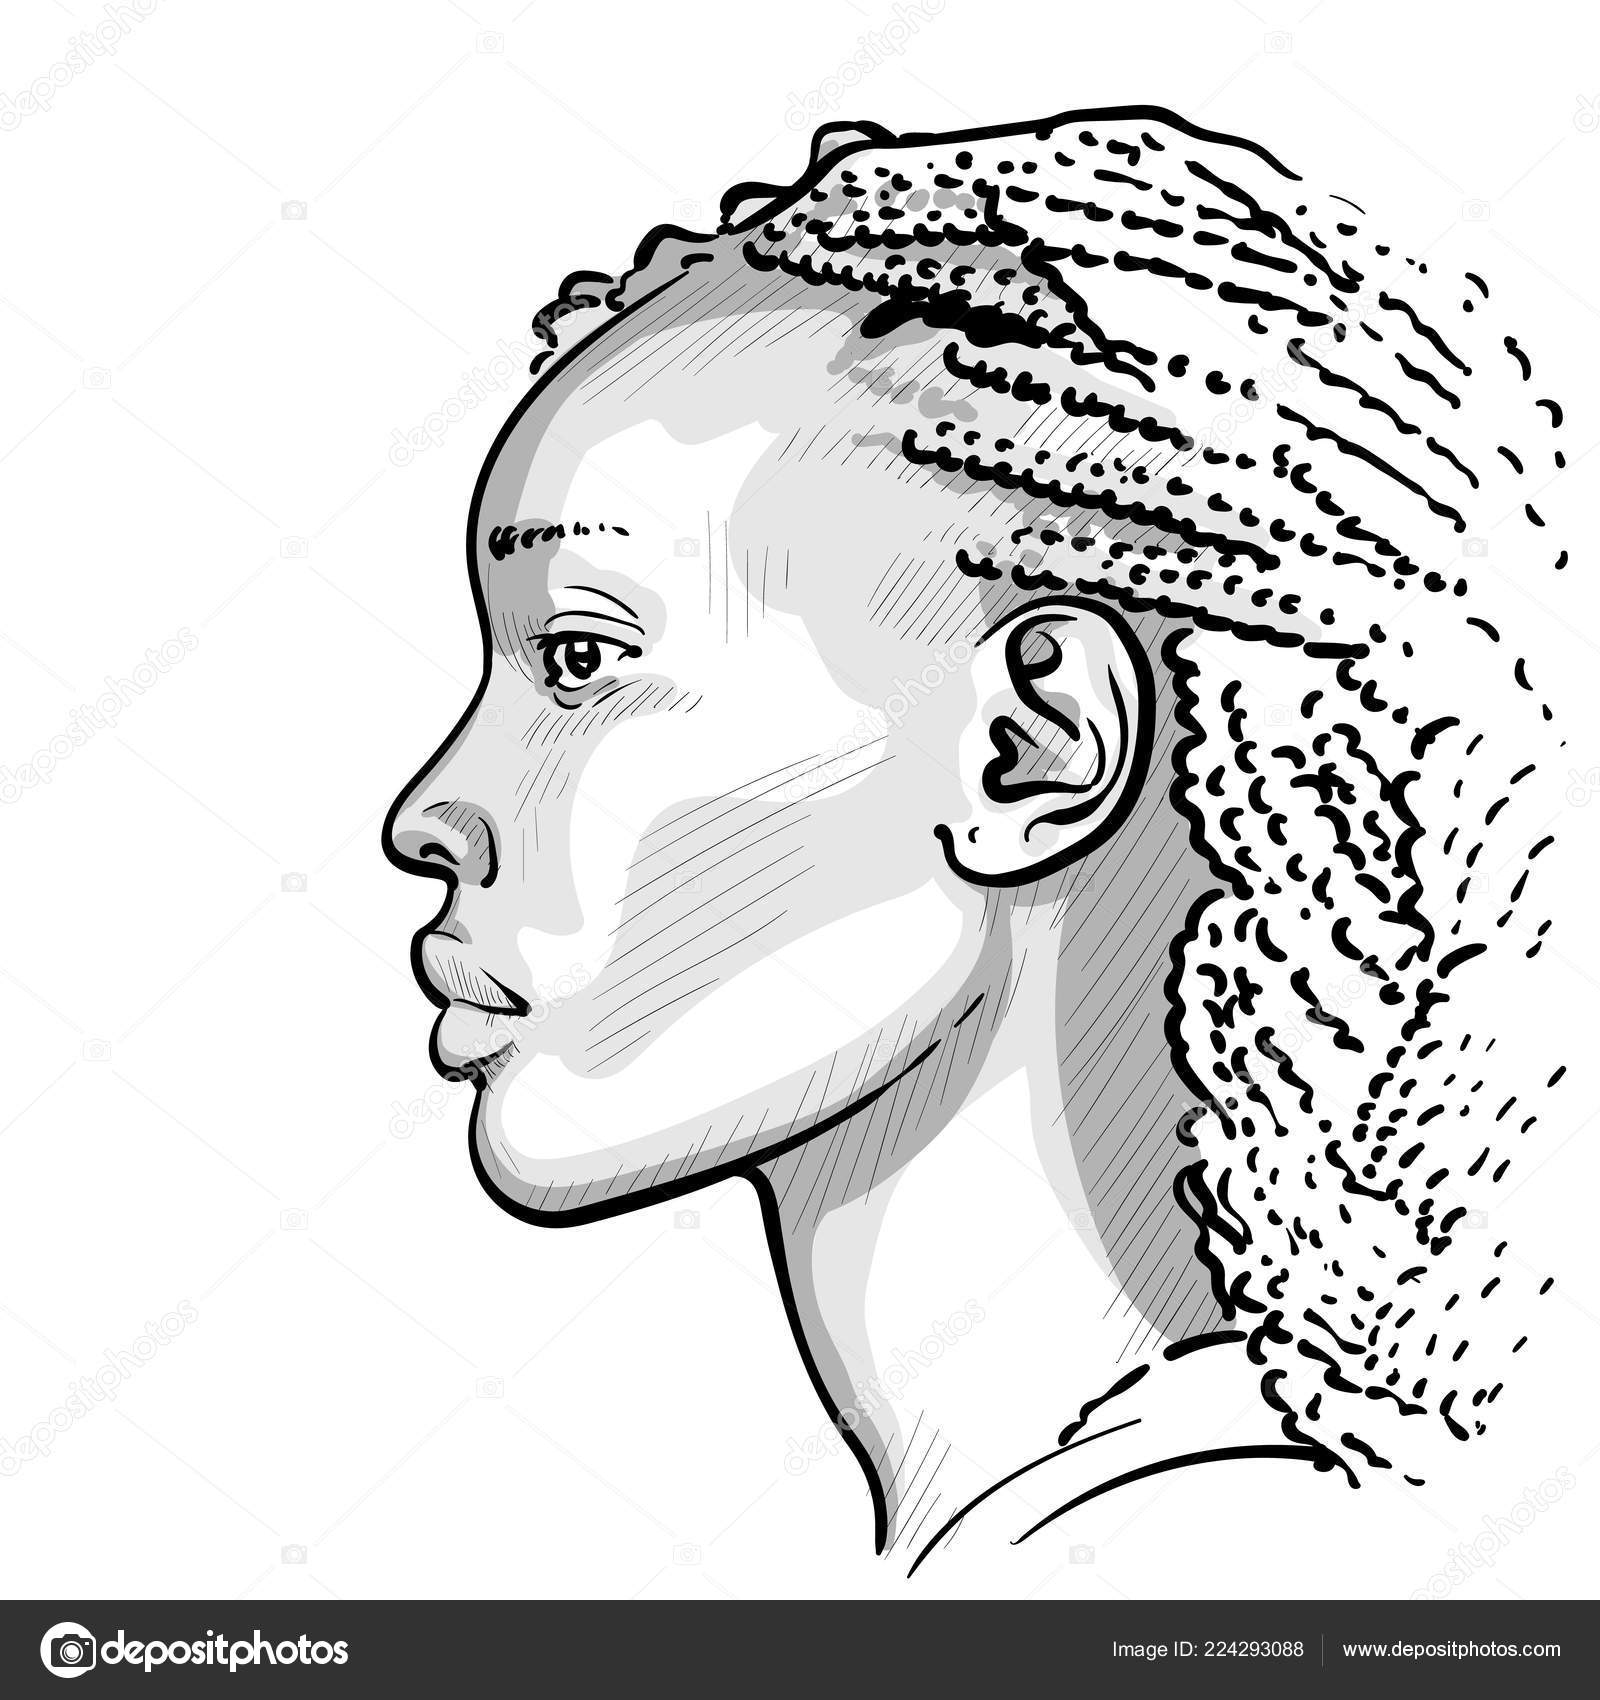 African Woman With Dreadlocks Digital Sketch Hand Drawing Vector Illustration Vector Image By C Tissen Vector Stock